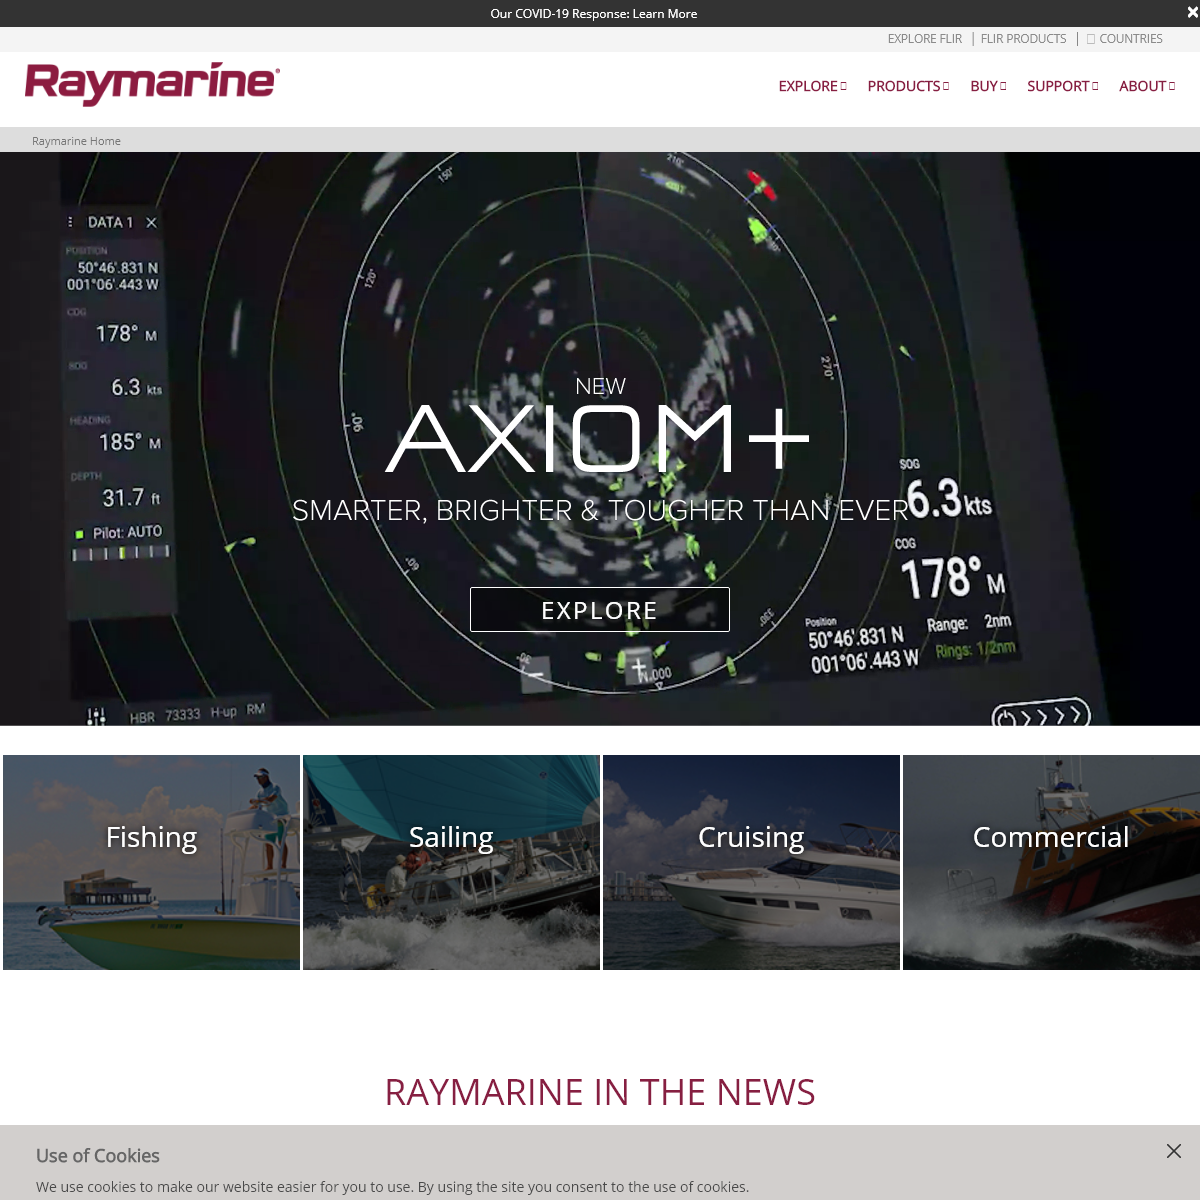 A complete backup of raymarine.com